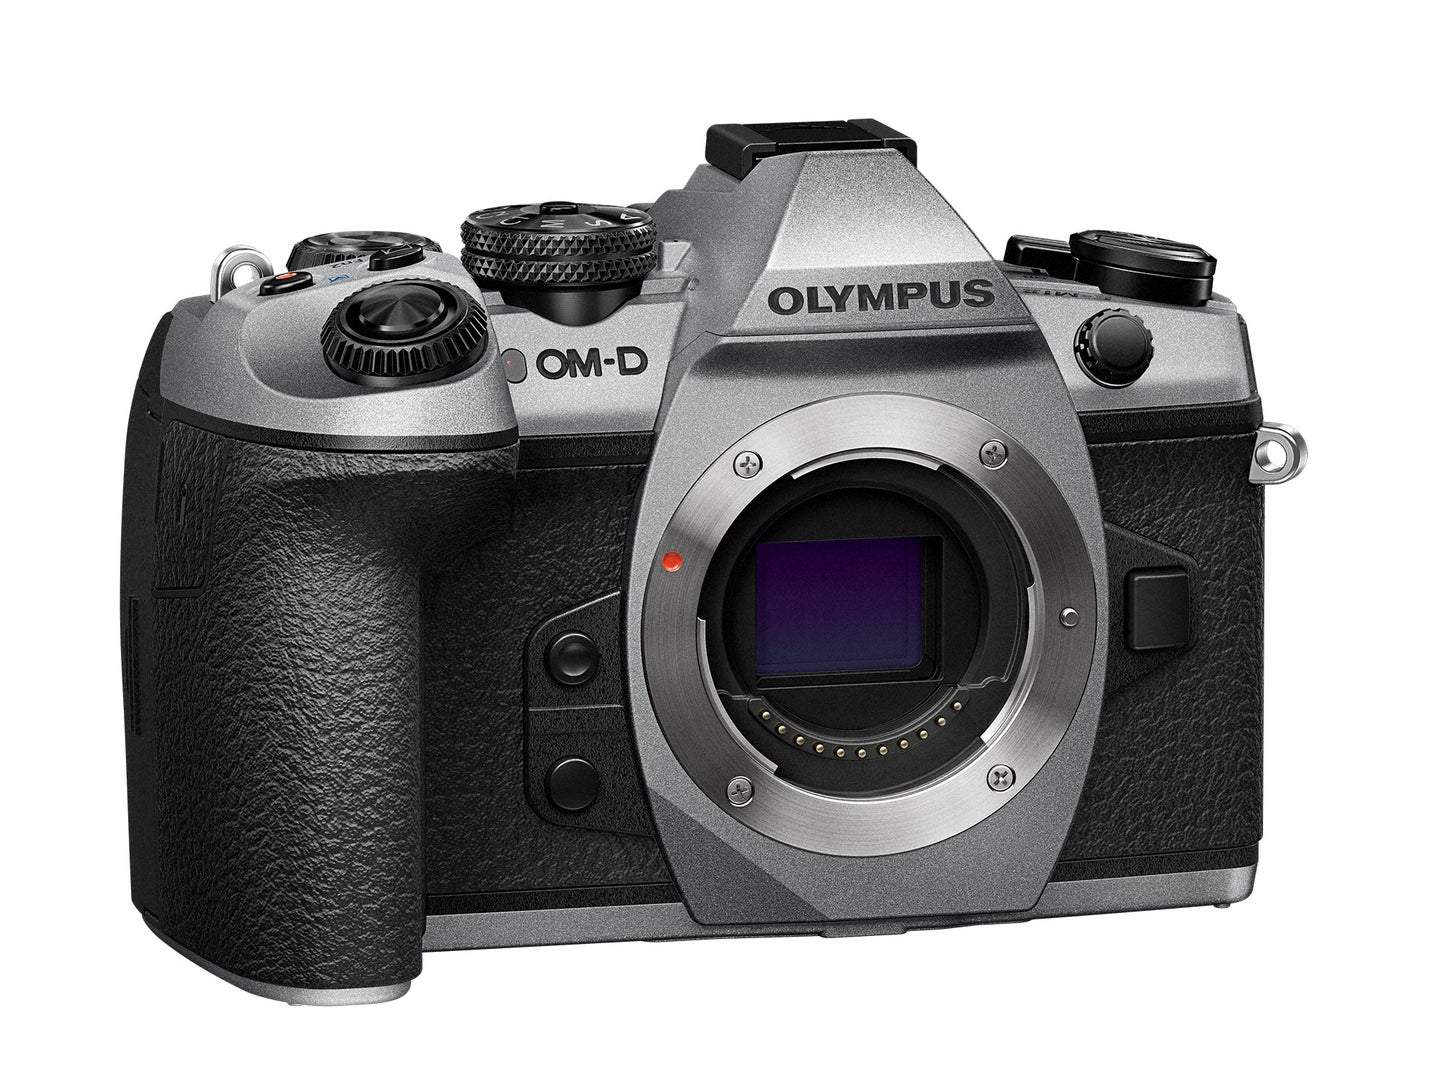 limited edition silver OM-D E-M1 Mark II camera